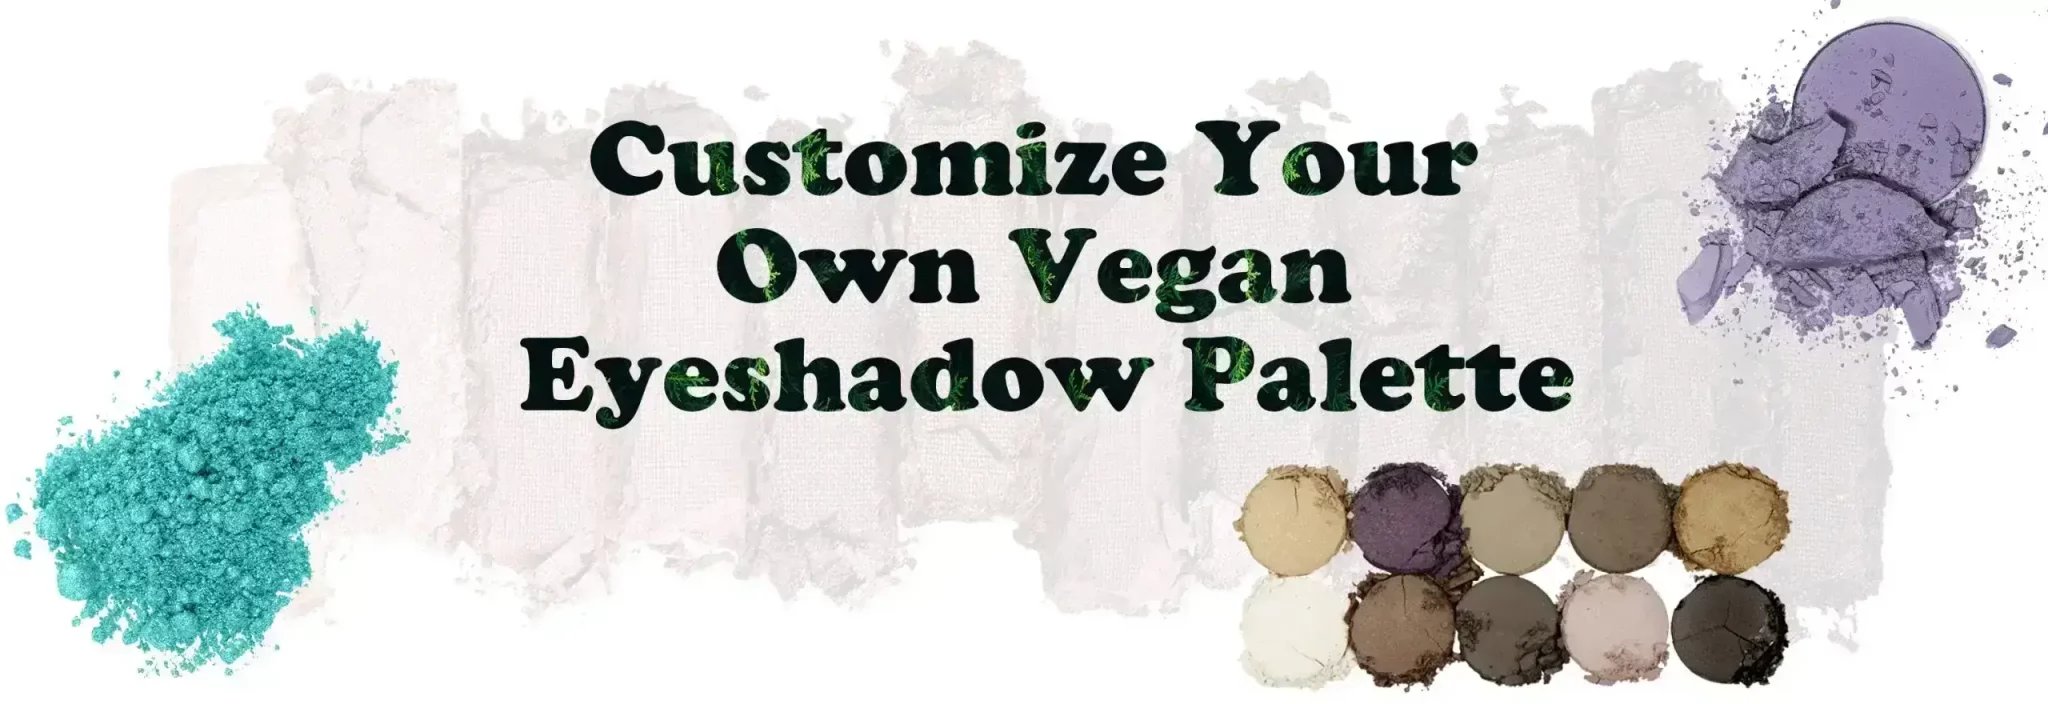 Private Label Vegan Makeup Customize Your Own